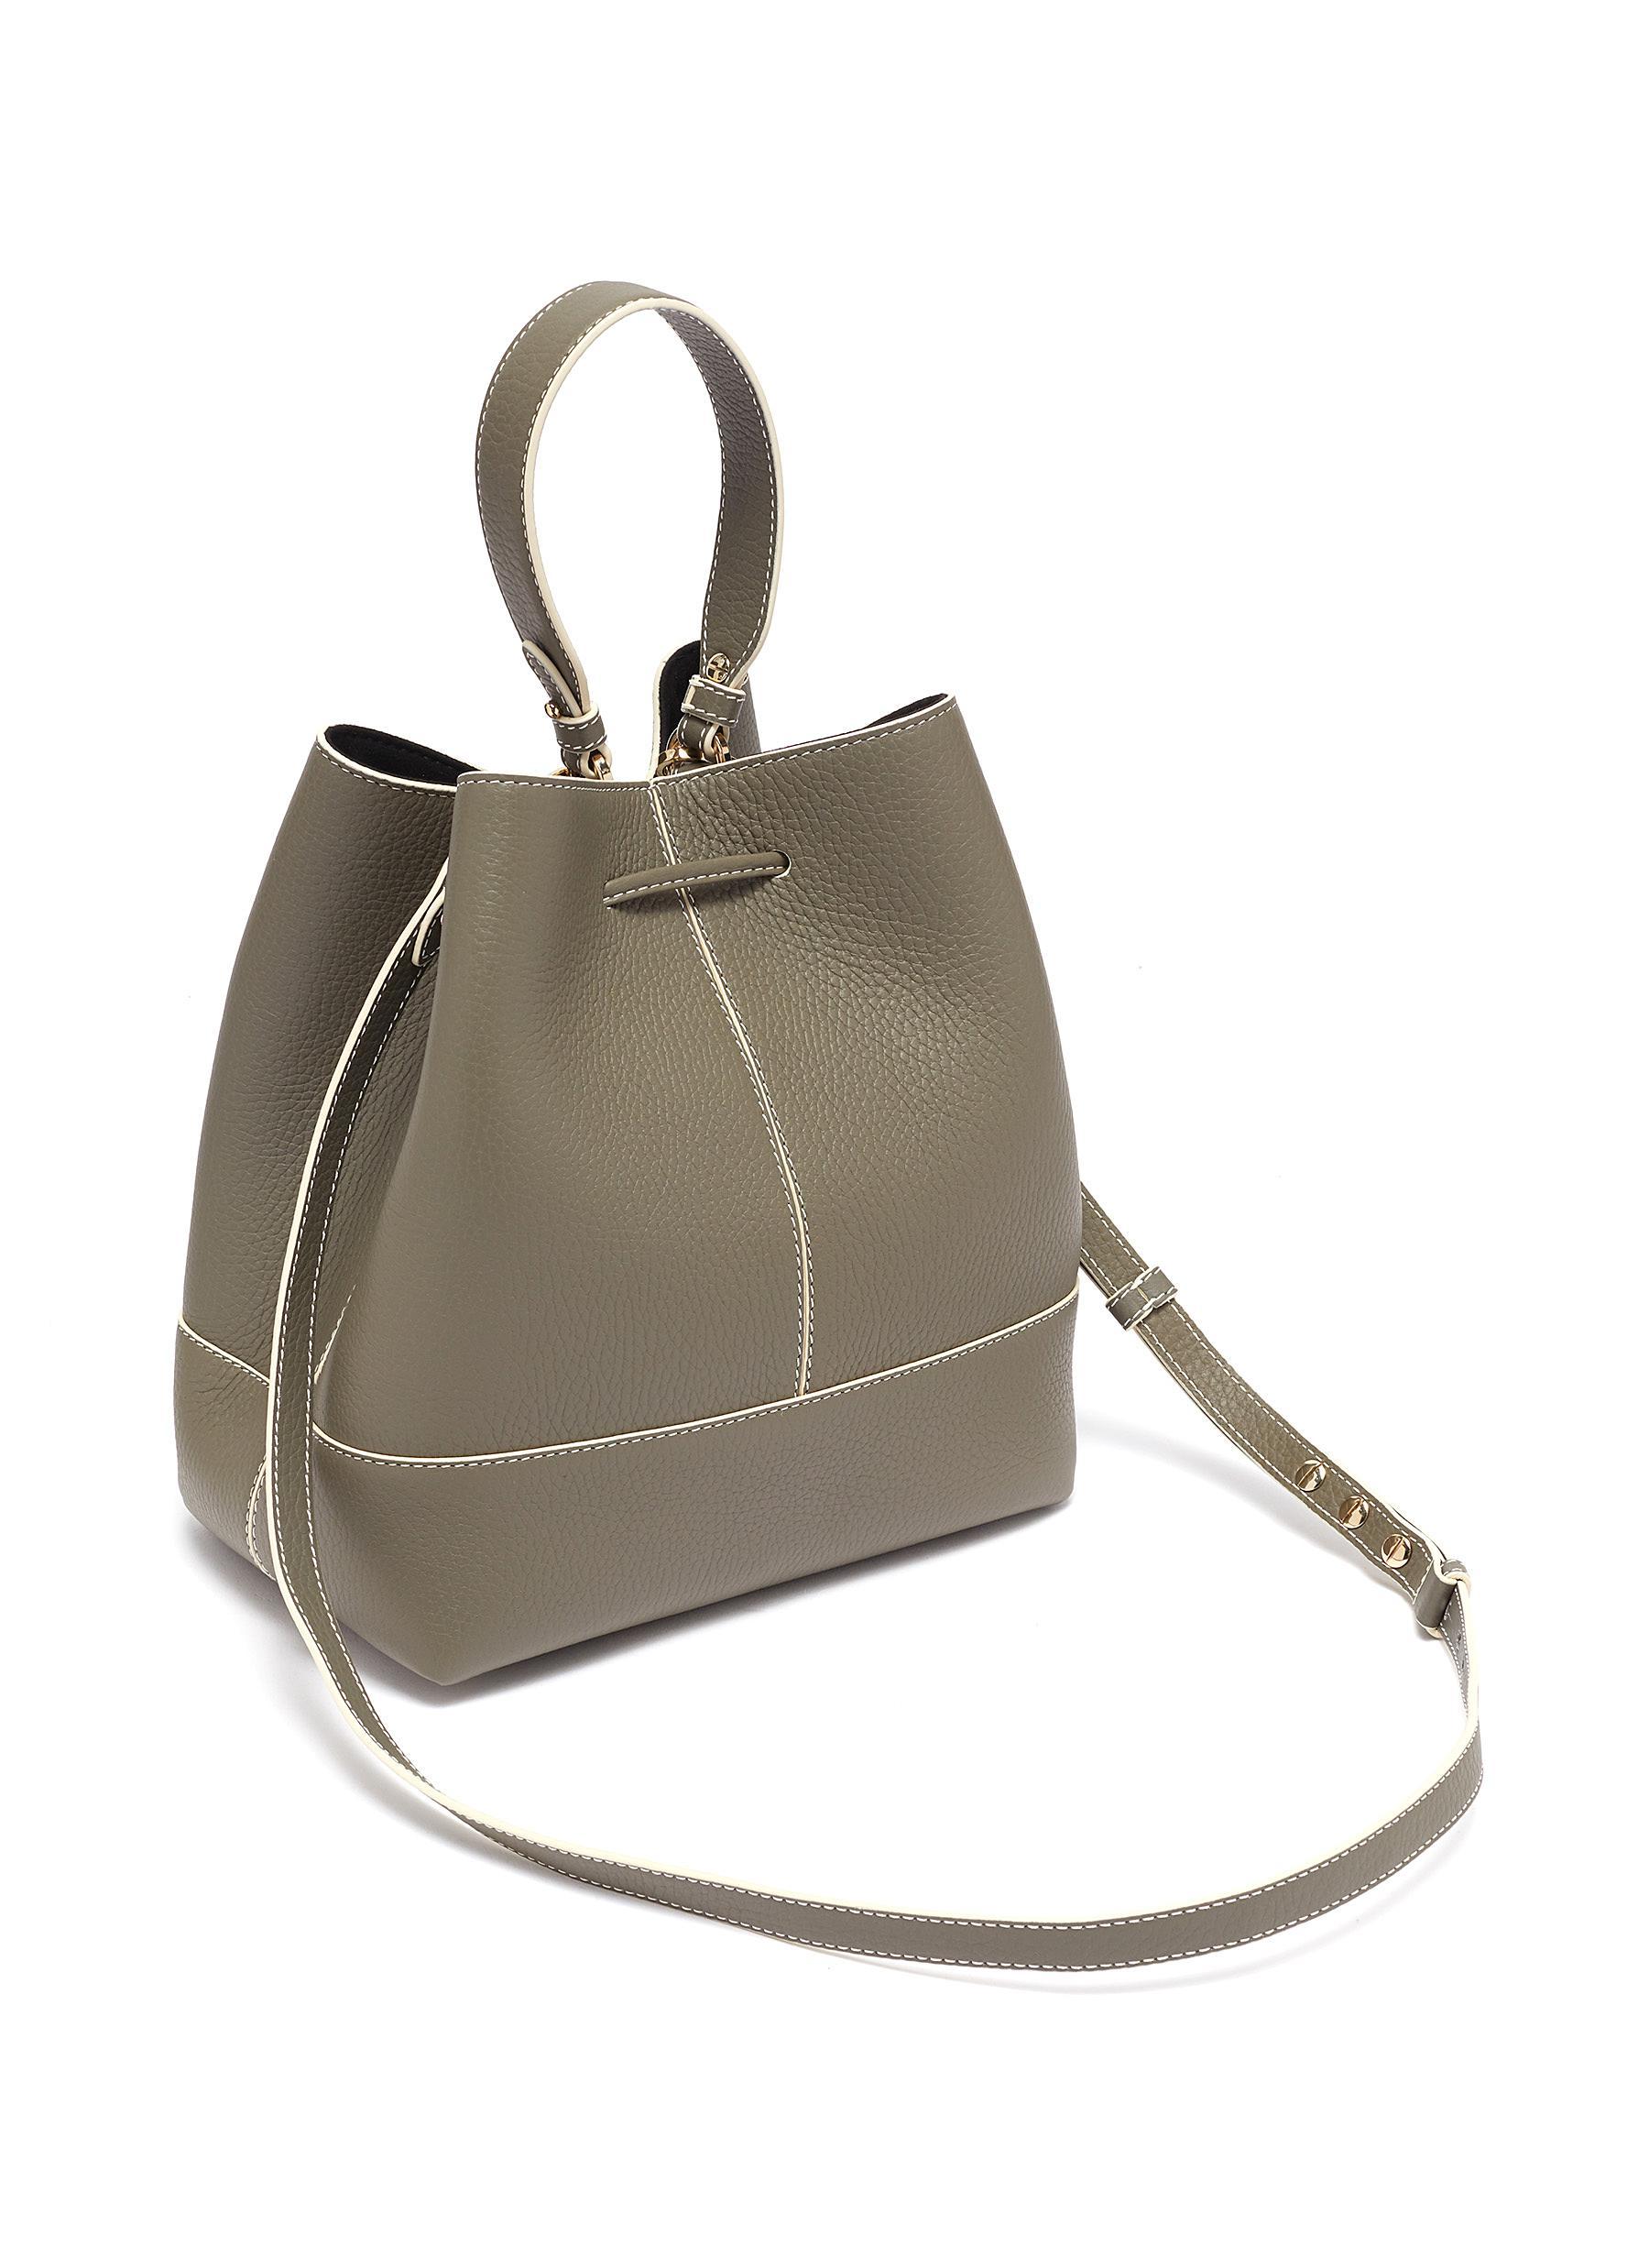 Strathberry - Lana Osette - Leather Mini Bucket Bag - Grey / Navy